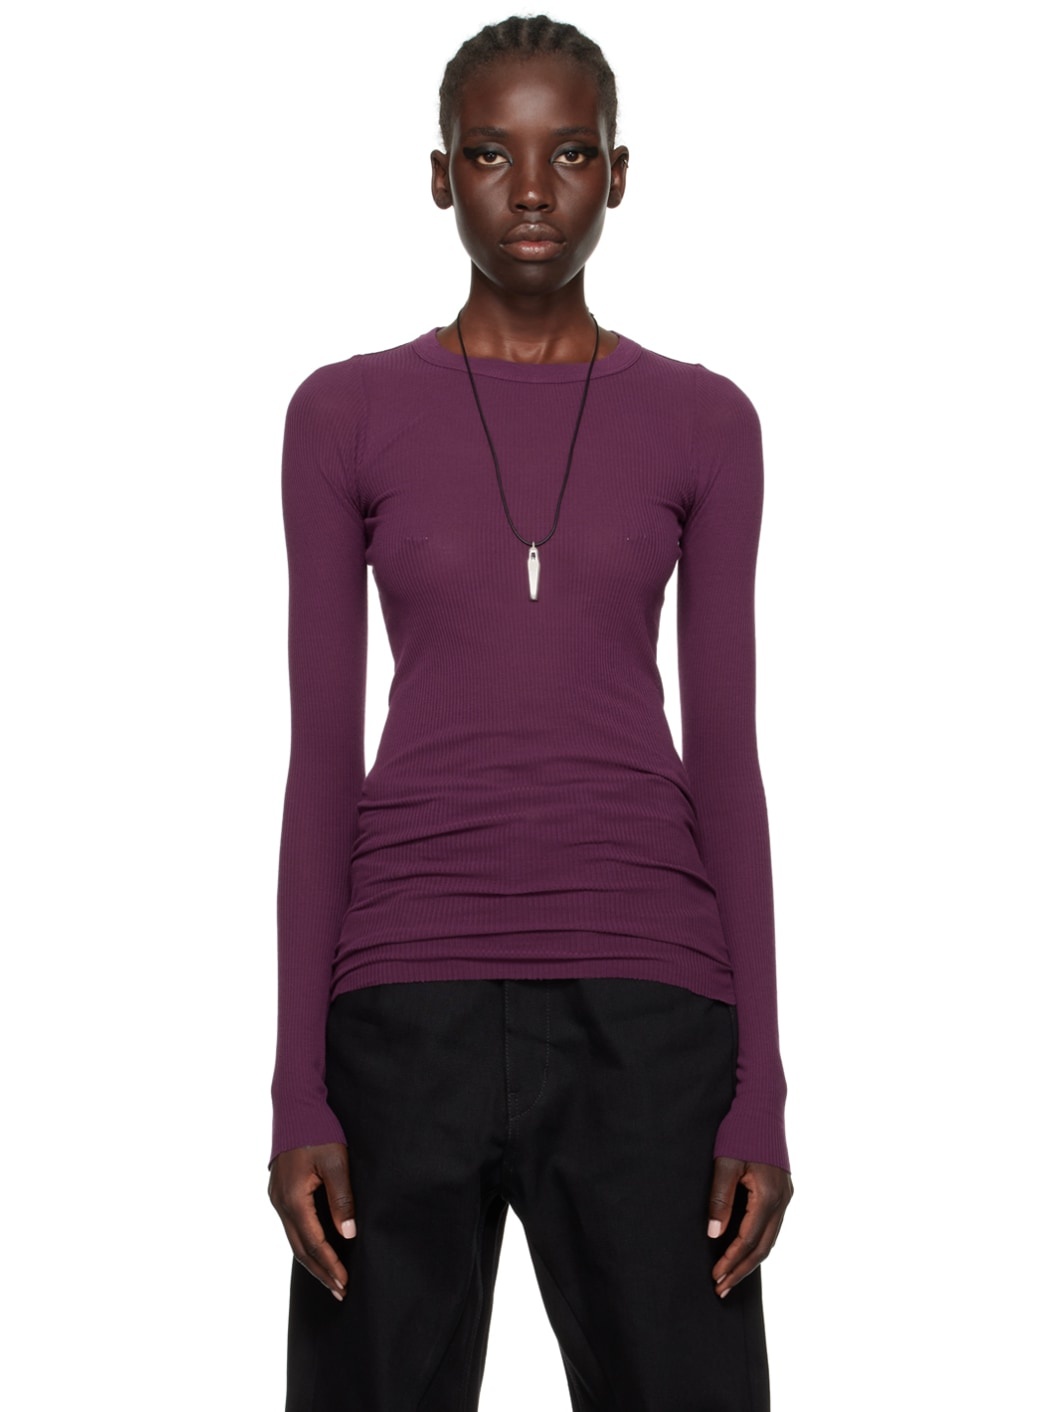 SSENSE Exclusive Purple KEMBRA PFAHLER Edition Long Sleeve T-Shirt - 1